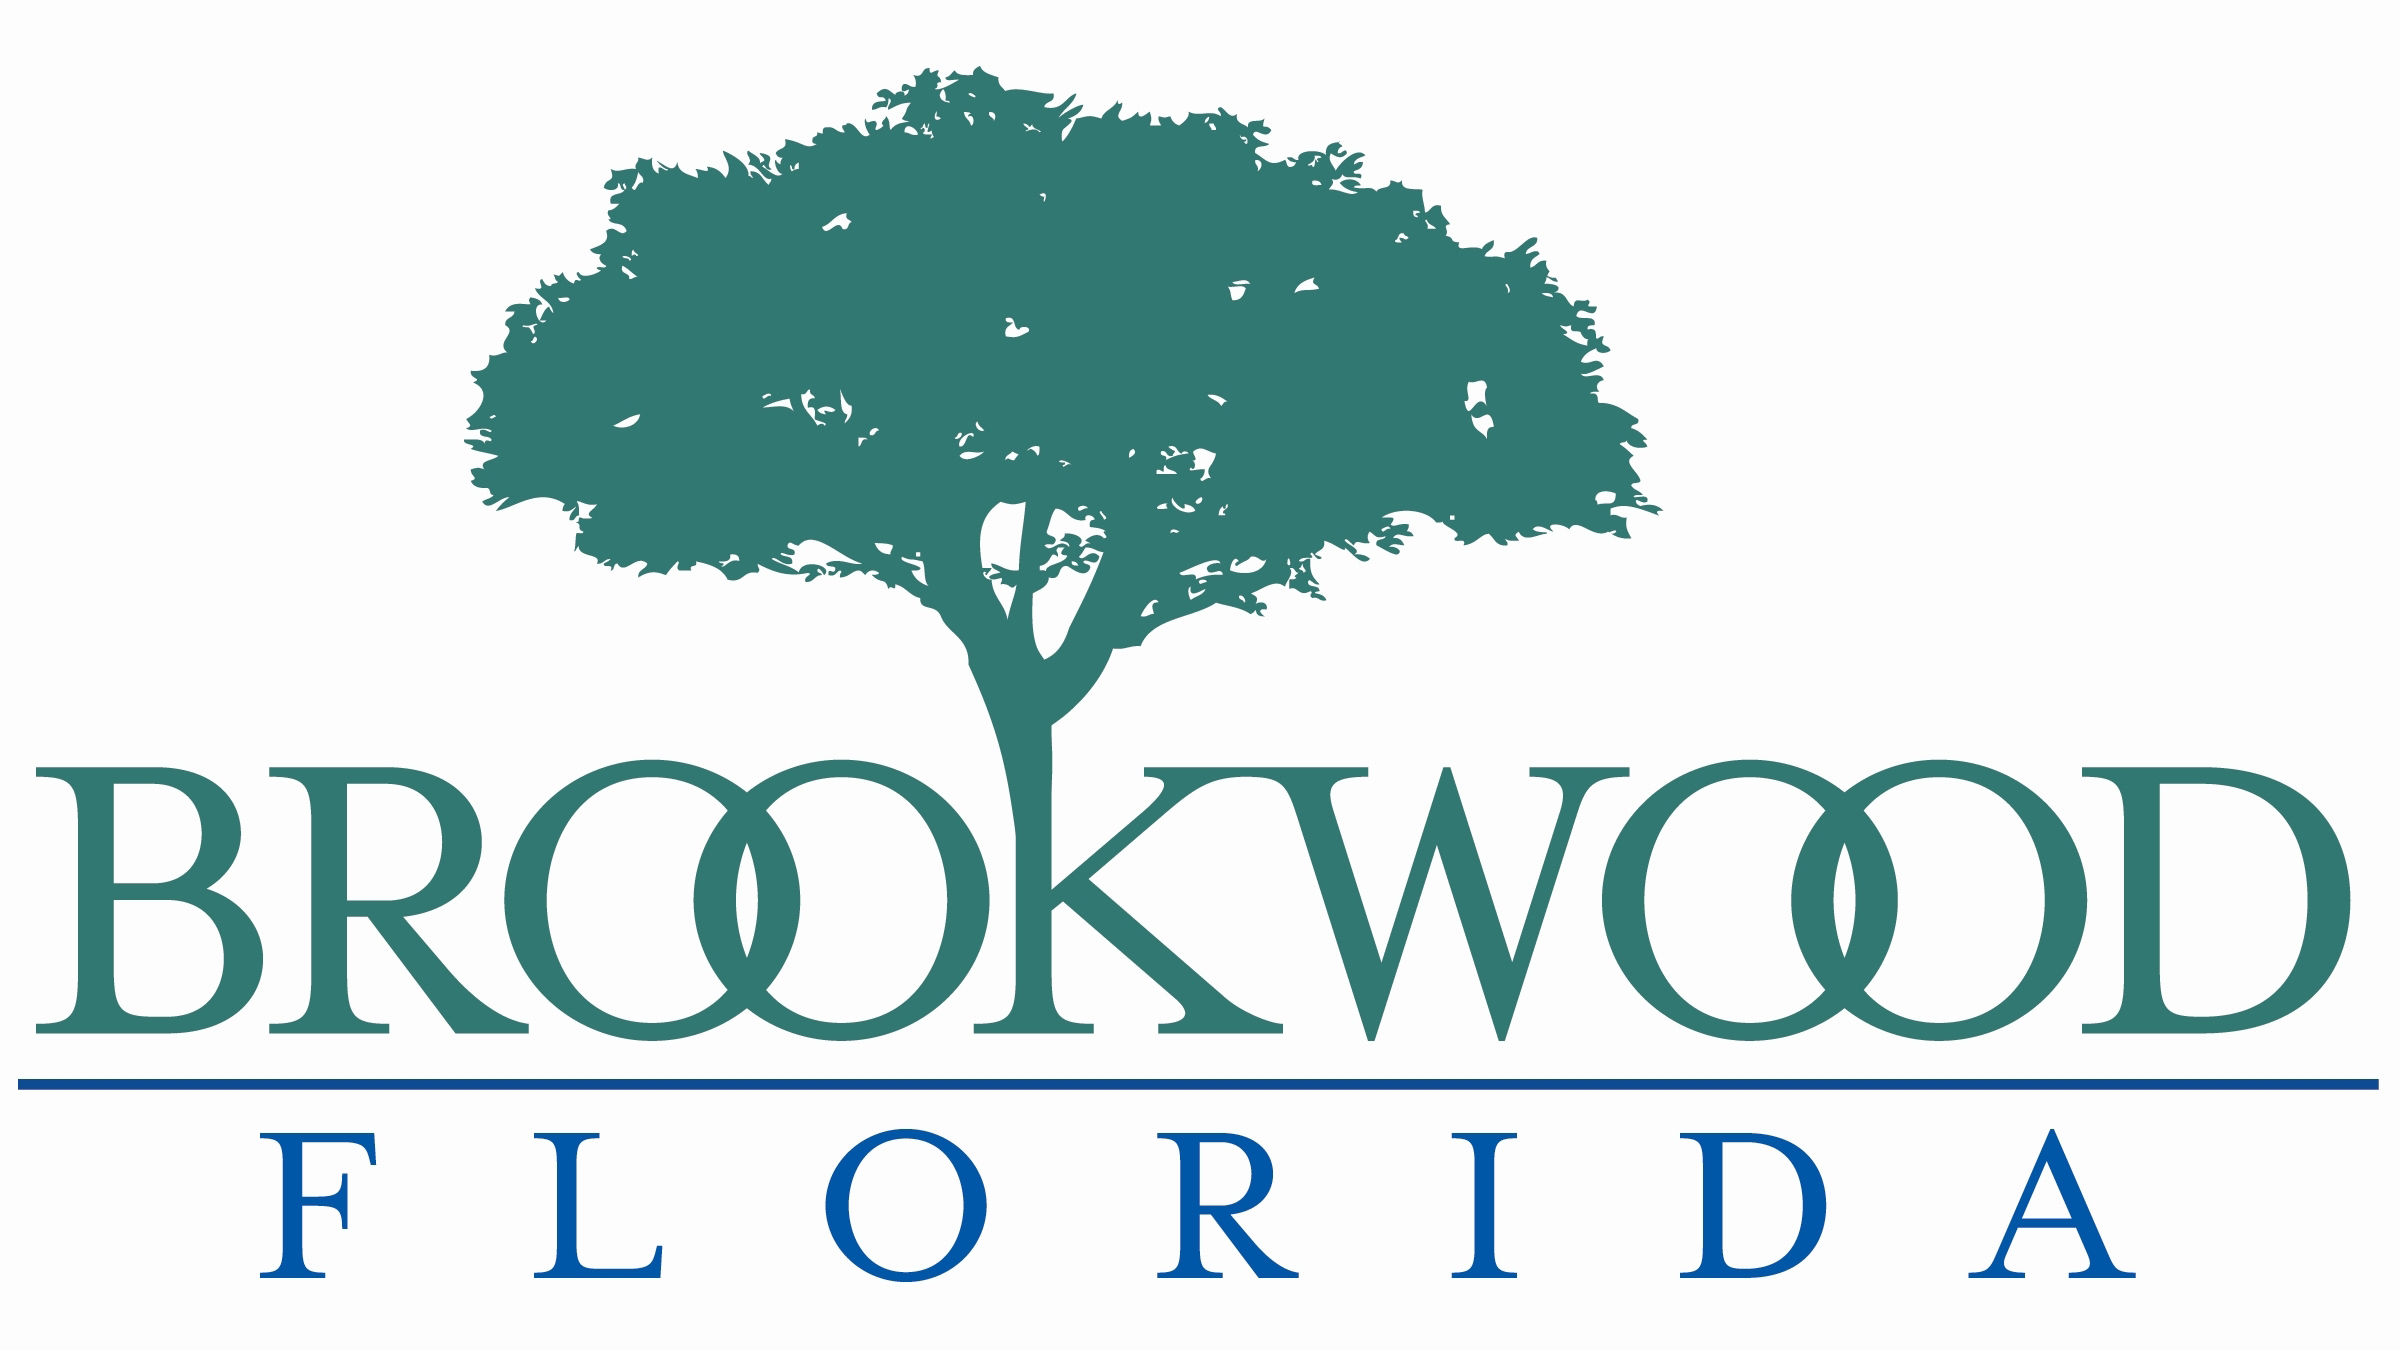 Brookwood Florida